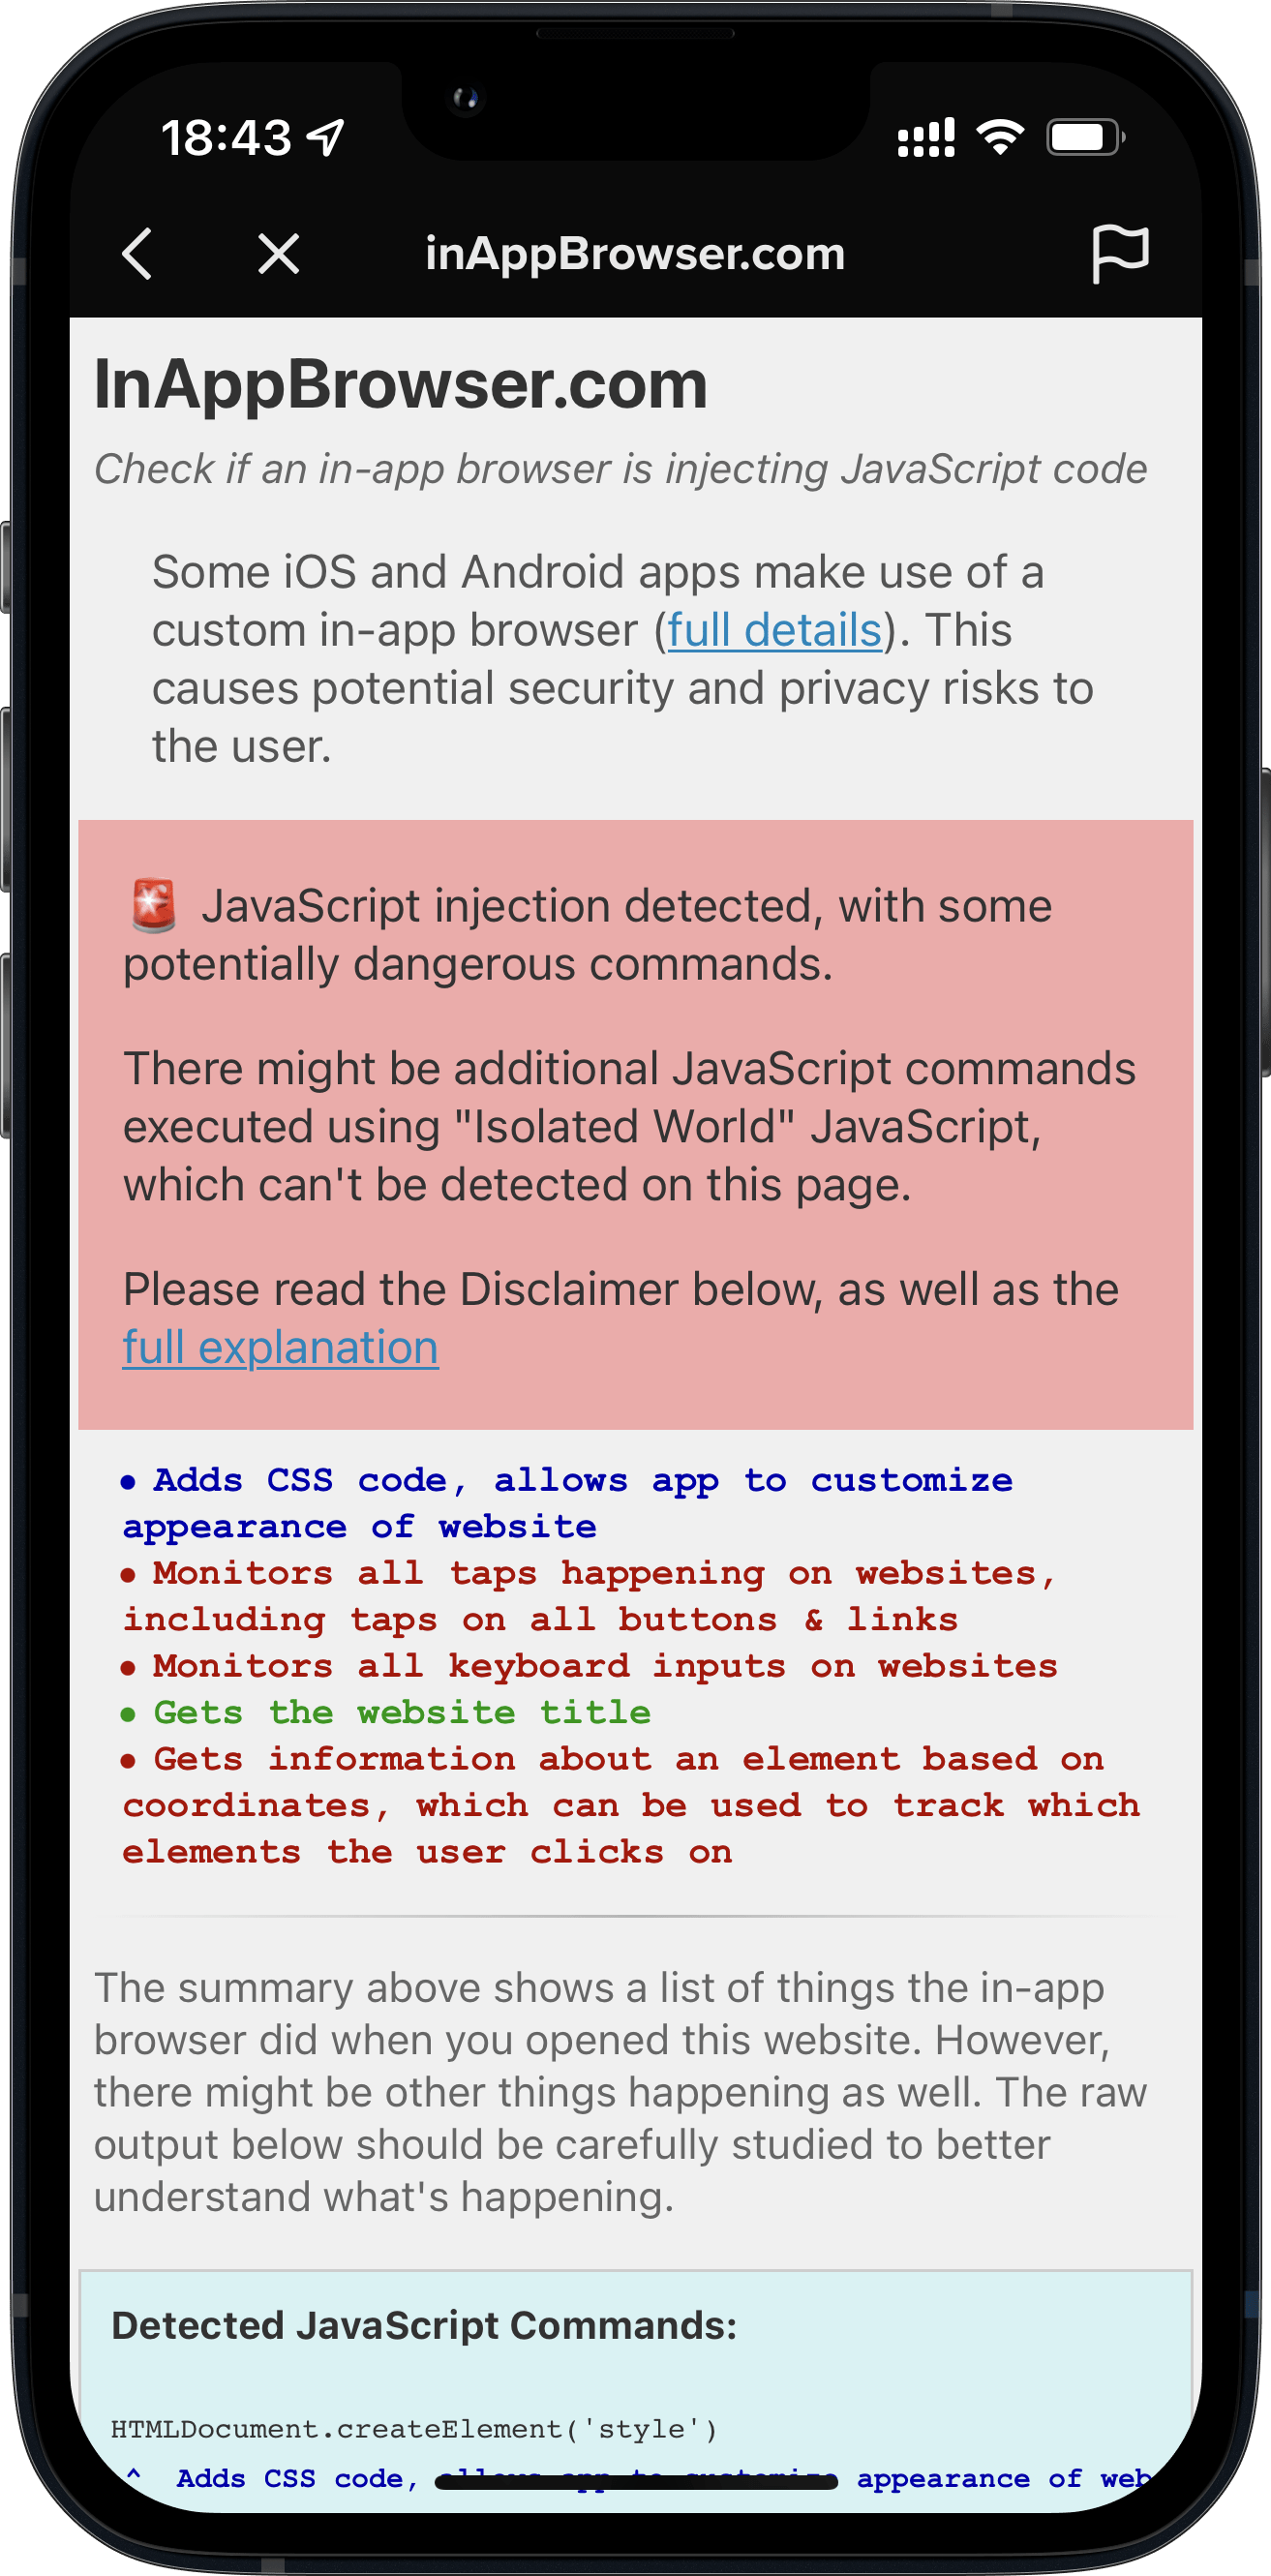 iPhone ที่แสดงเว็บไซต์ inappbrowser.com แสดงผลภายใน TikTok แสดงให้เห็นว่ามีการเพิ่มโค้ด CSS อย่างไร เพิ่มการตรวจสอบสำหรับการแตะทั้งหมดและอินพุตคีย์บอร์ดทั้งหมด ตลอดจนรับพิกัดขององค์ประกอบที่ผู้ใช้แตะ